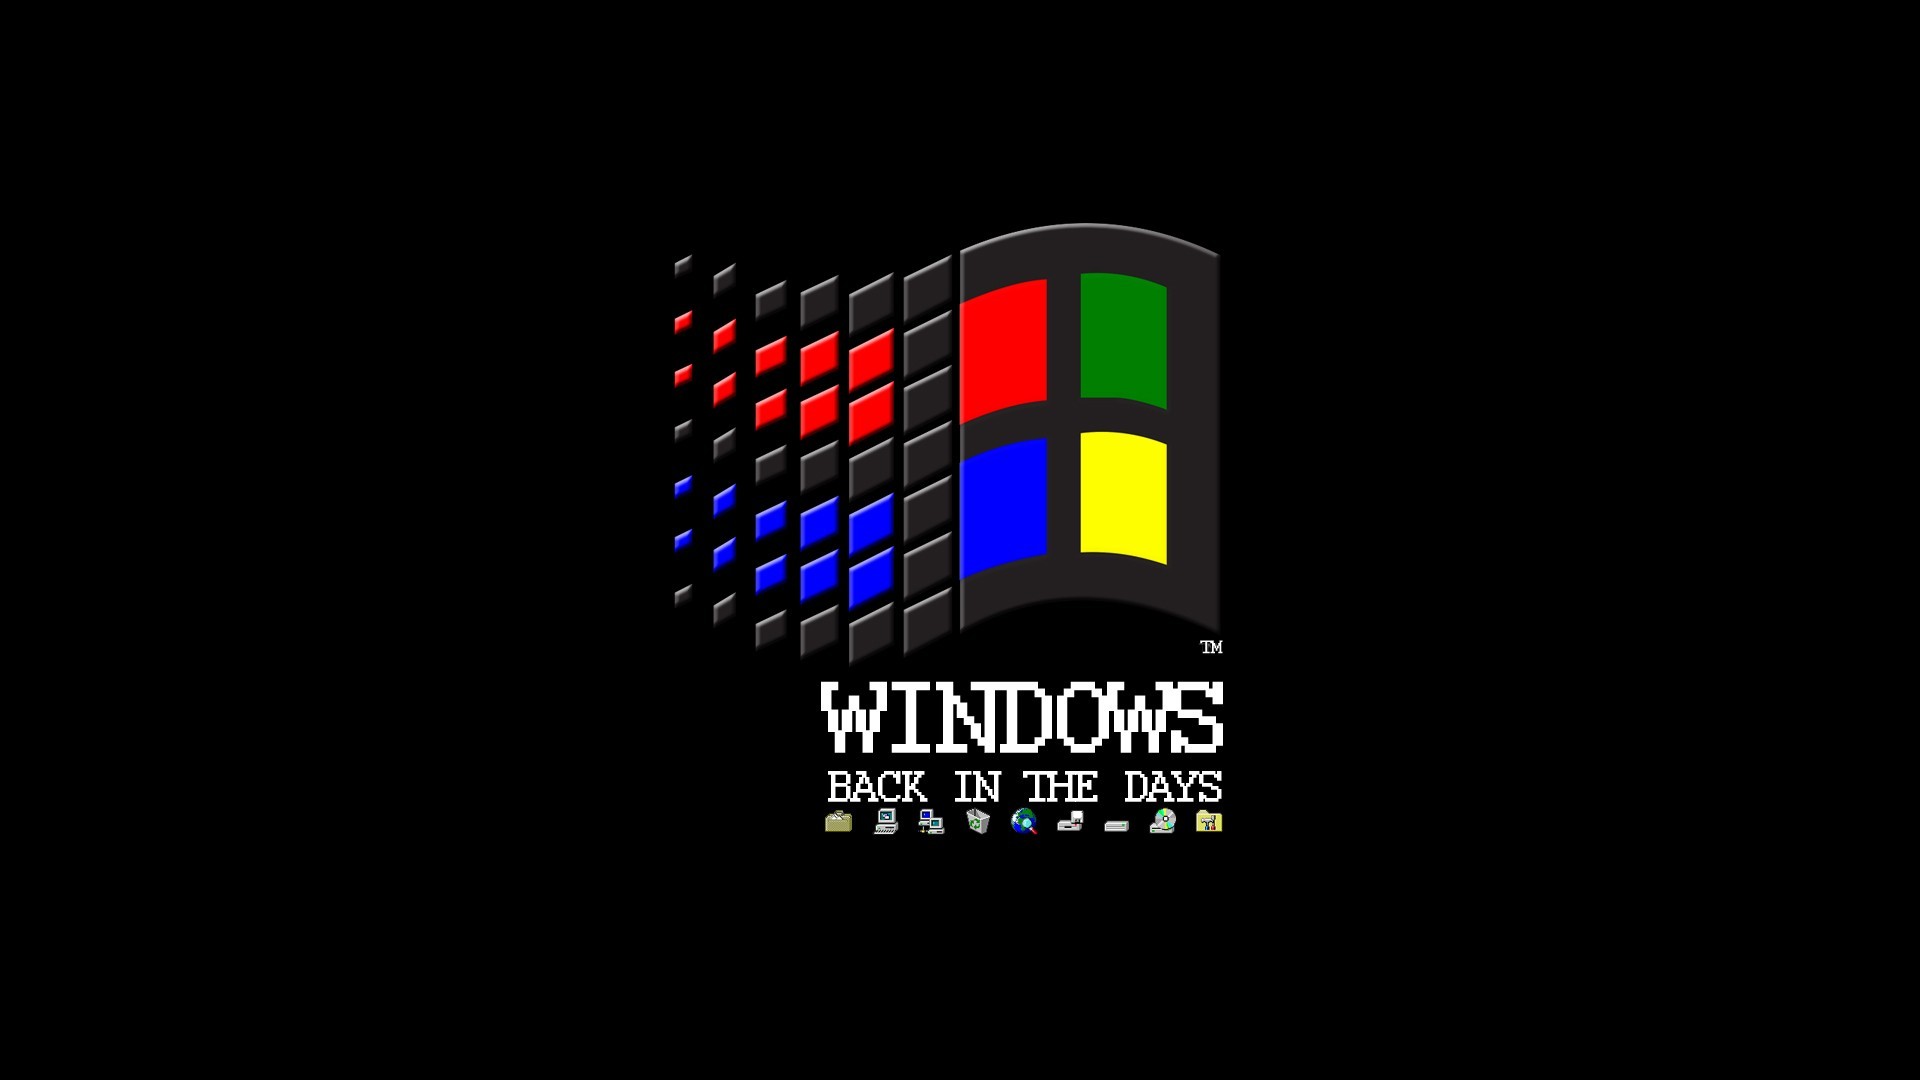 Microsoft Windows, Vintage, Logo, Black Background, Floppy Disk, MS DOS, Internet Wallpaper